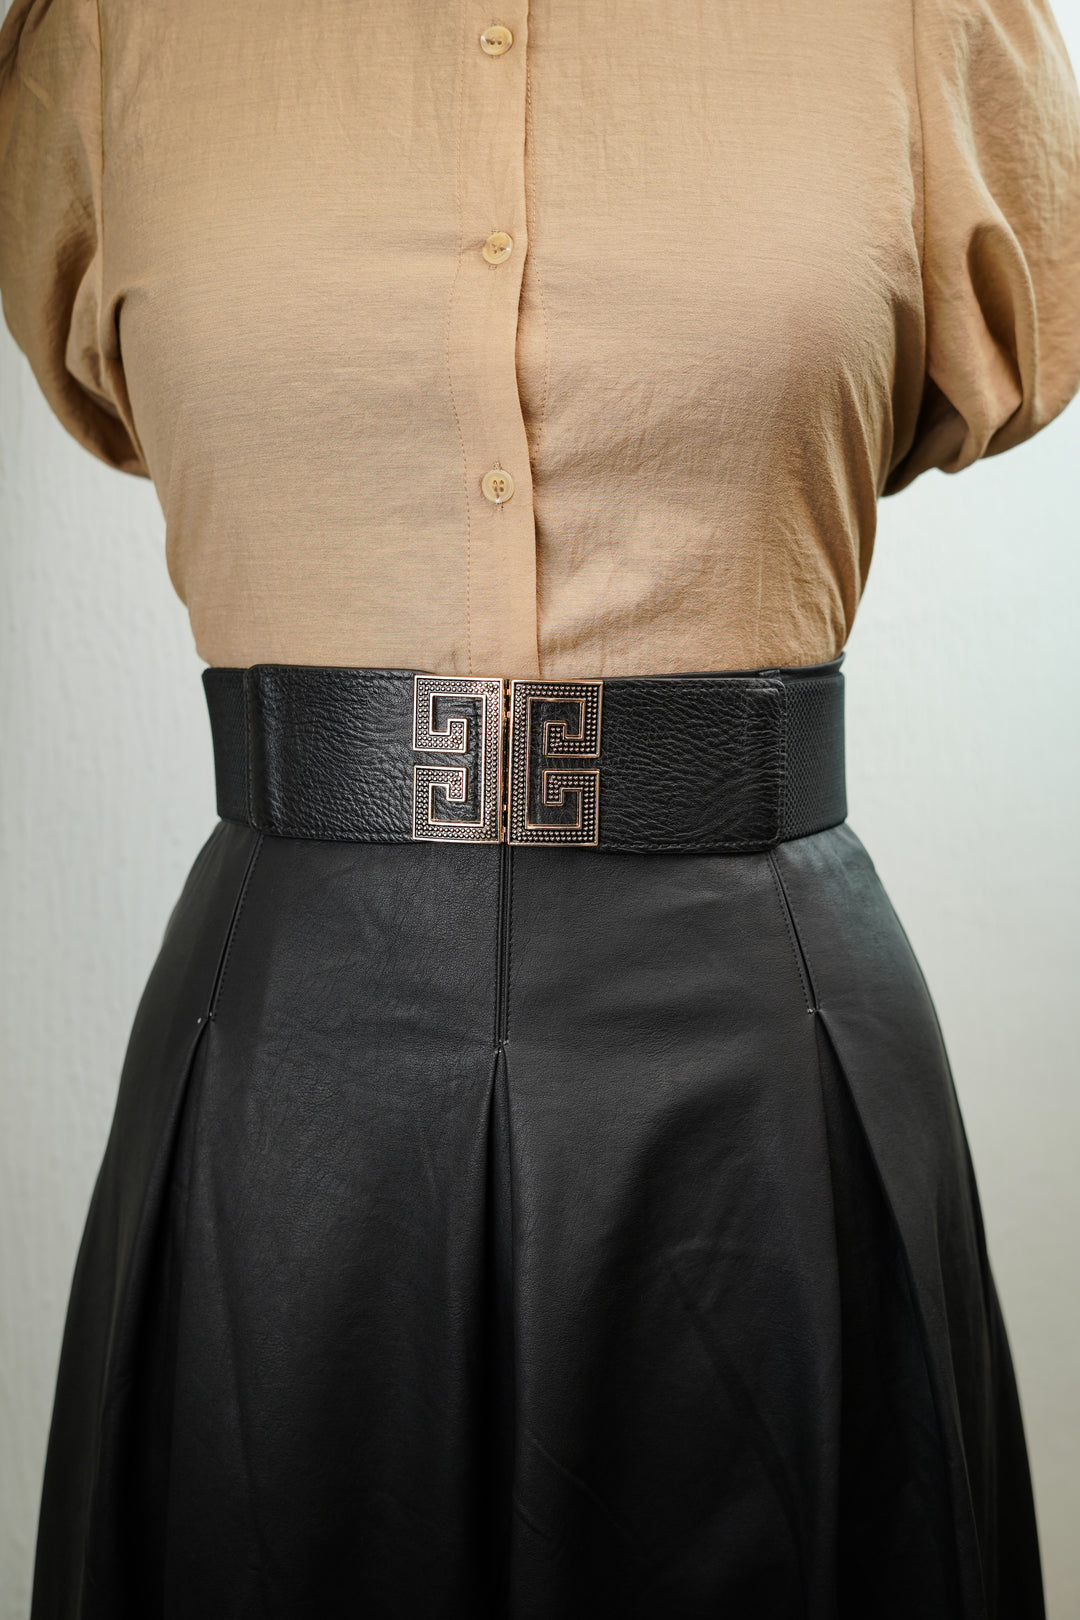 Women's back elastic belts with hook closure